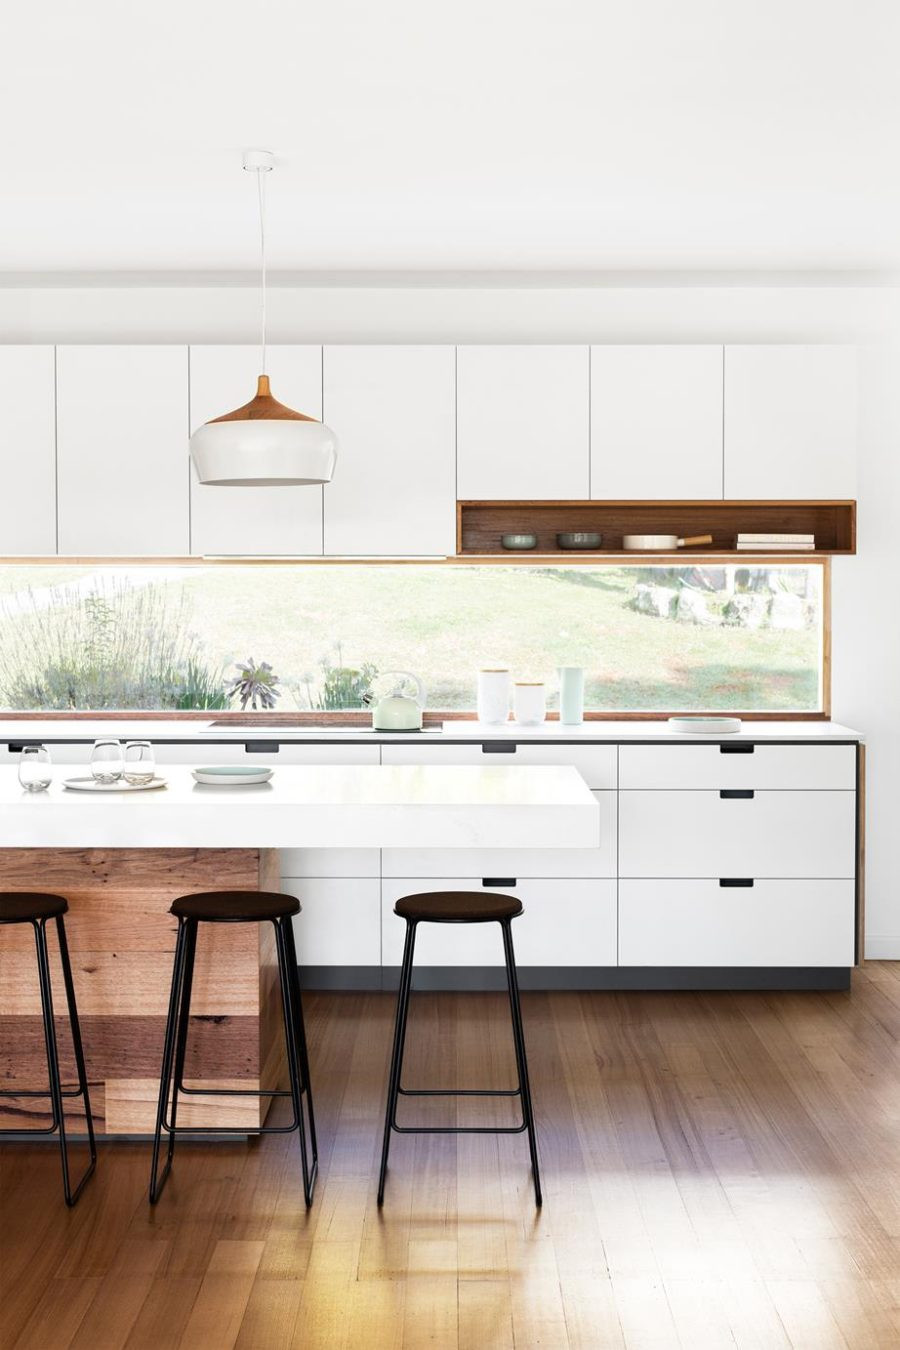 New Kitchen Backsplash
 Modern Kitchen Backsplash Ideas for Cooking With Style